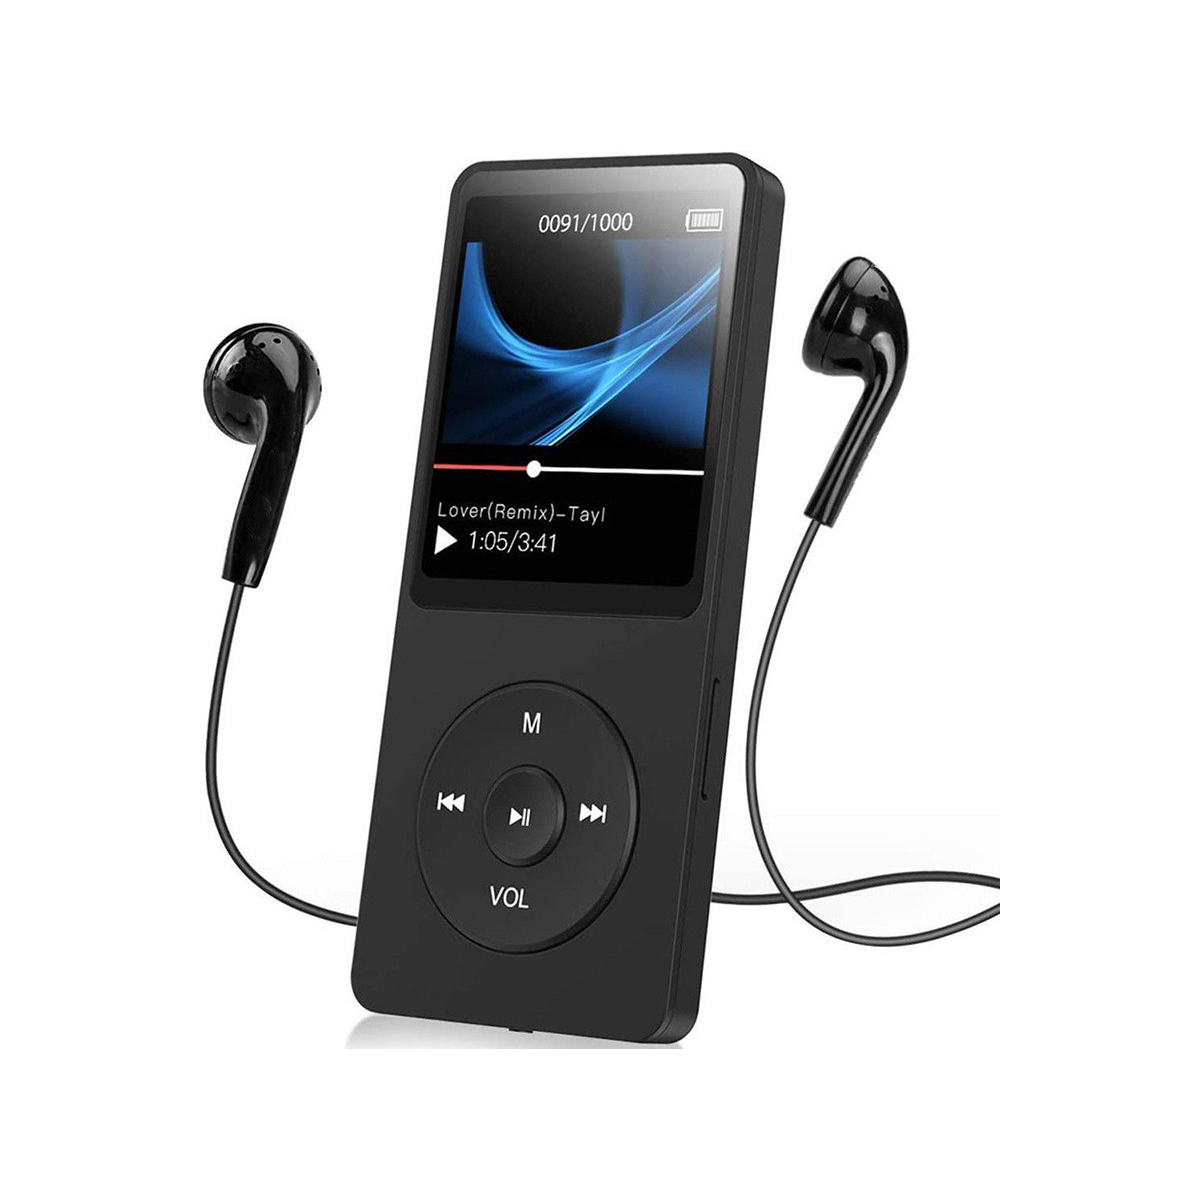 GB, MP3 Edition (64 Musikspieler Walkman schwarz) SYNTEK Walkman MP3/MP4 Ebook Bluetooth Player Student Player